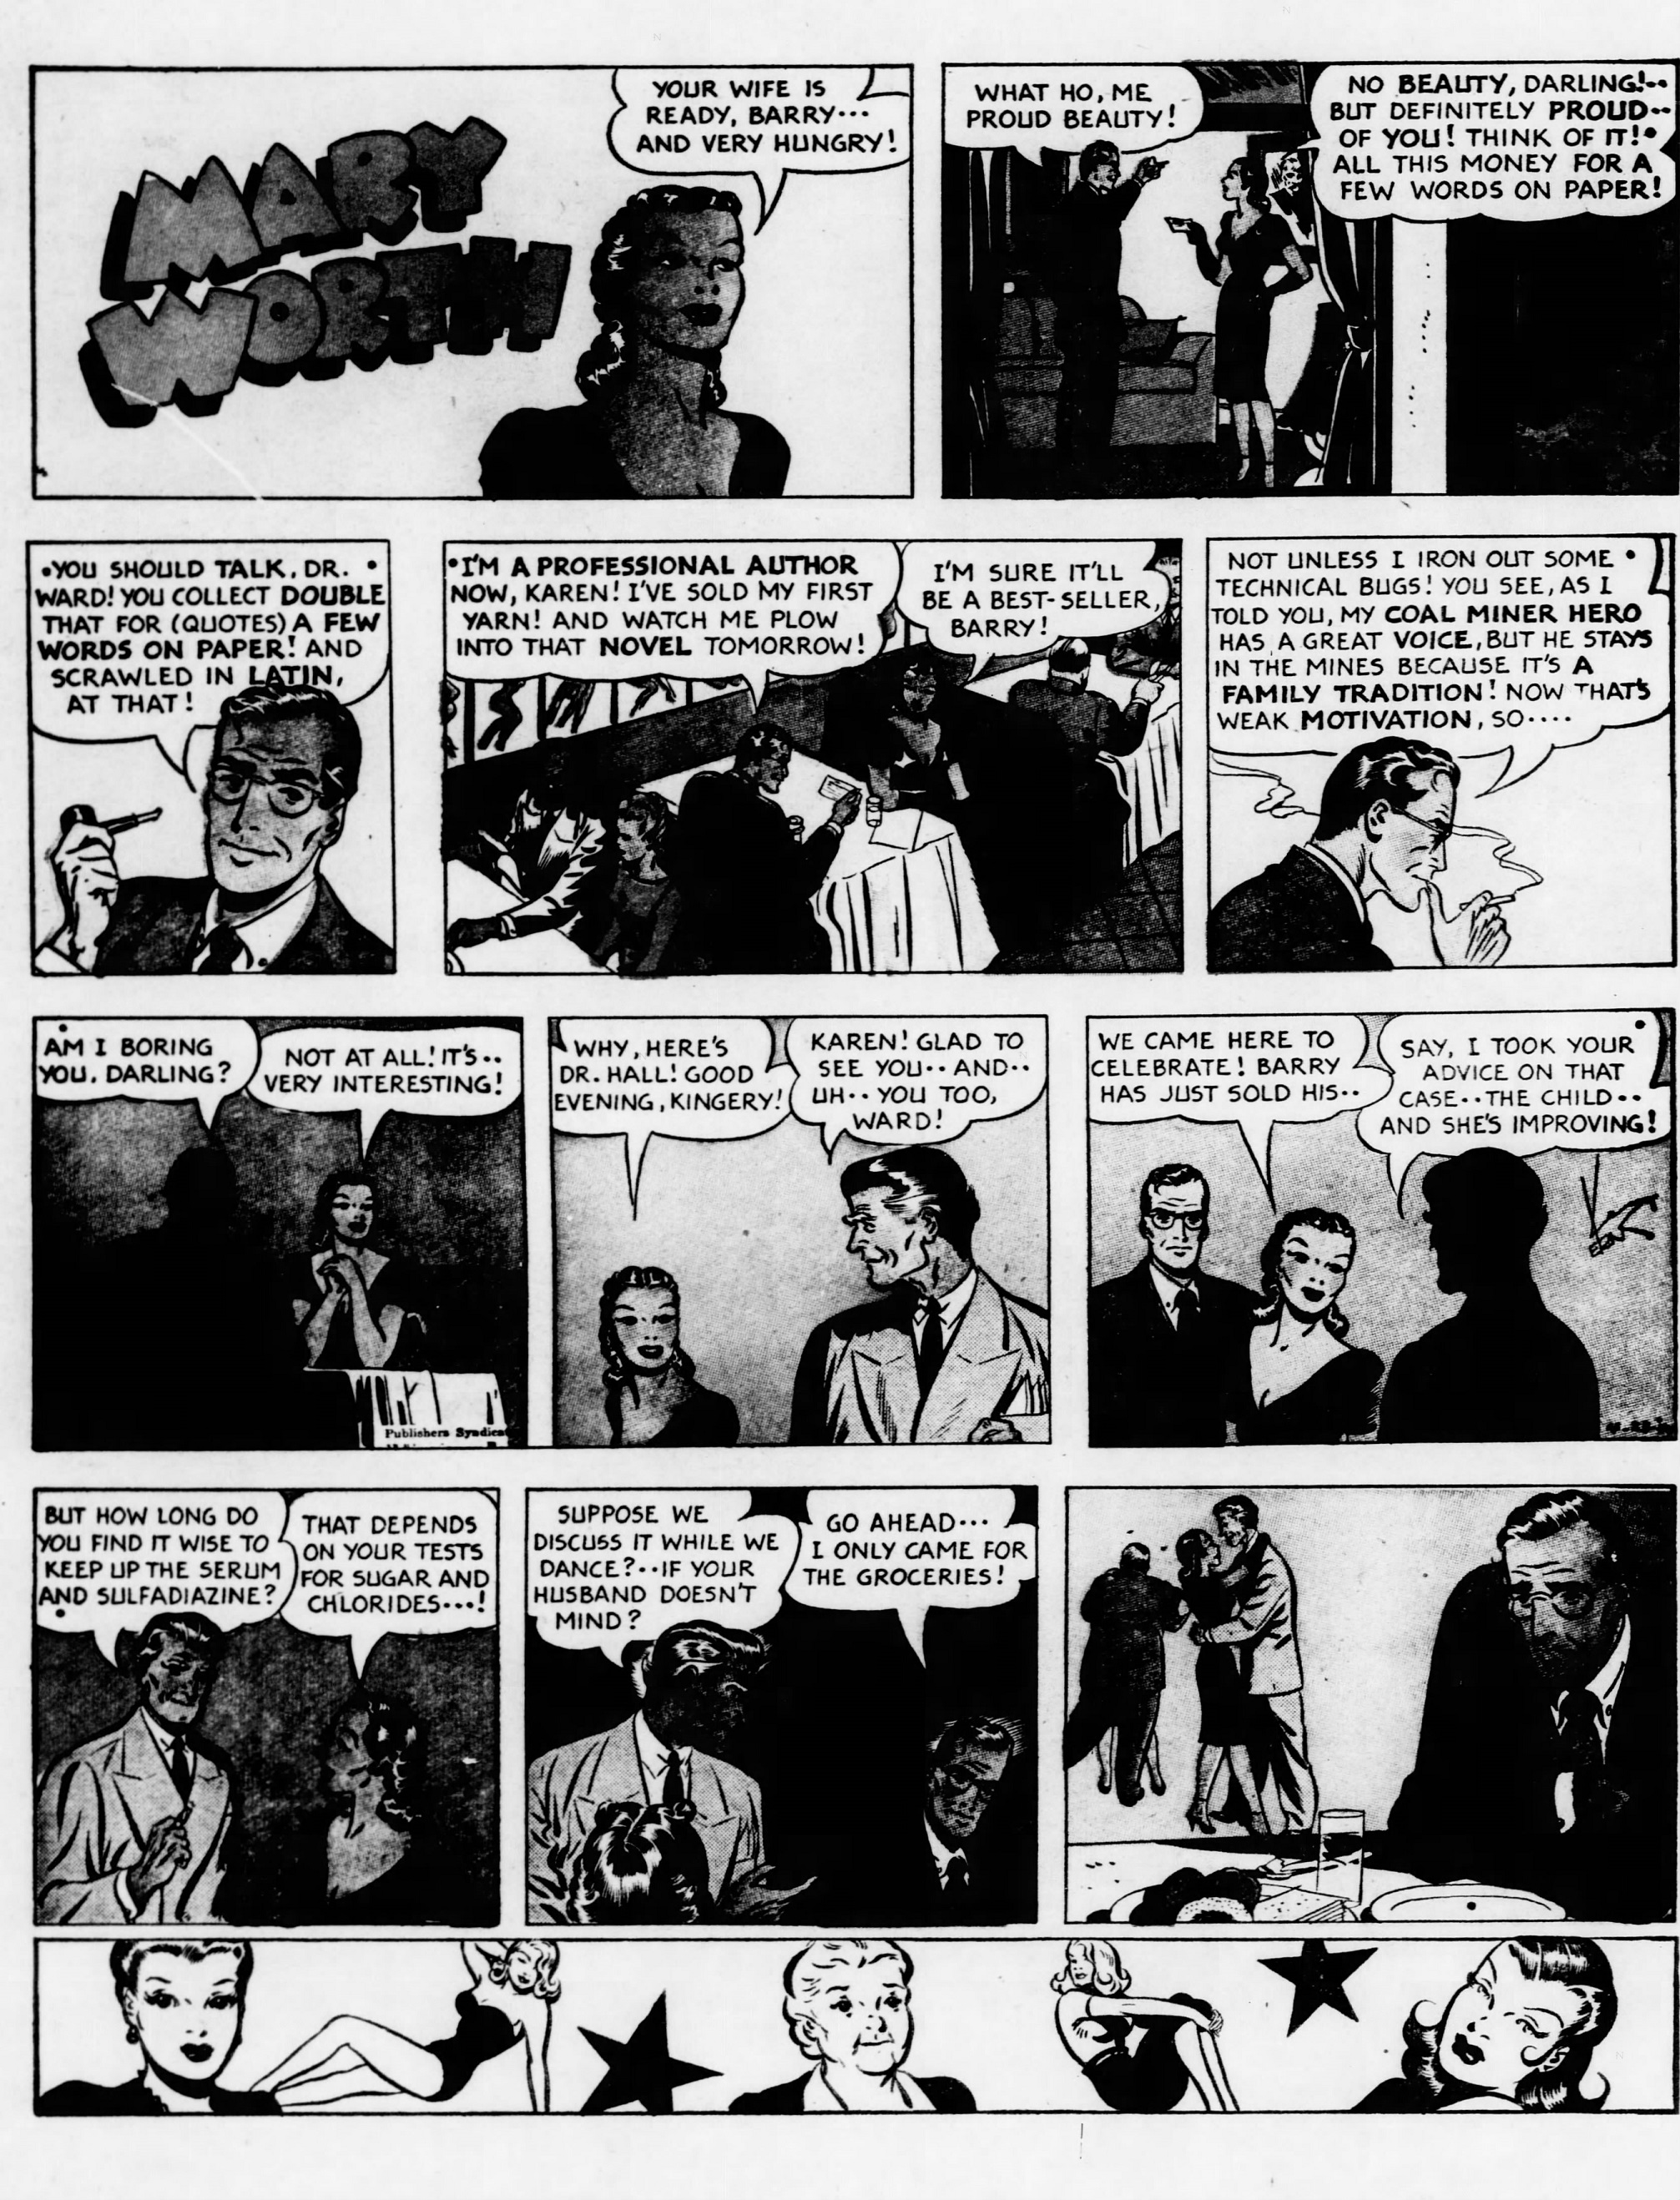 The_Brooklyn_Daily_Eagle_Sun__Apr_23__1944_(10).jpg